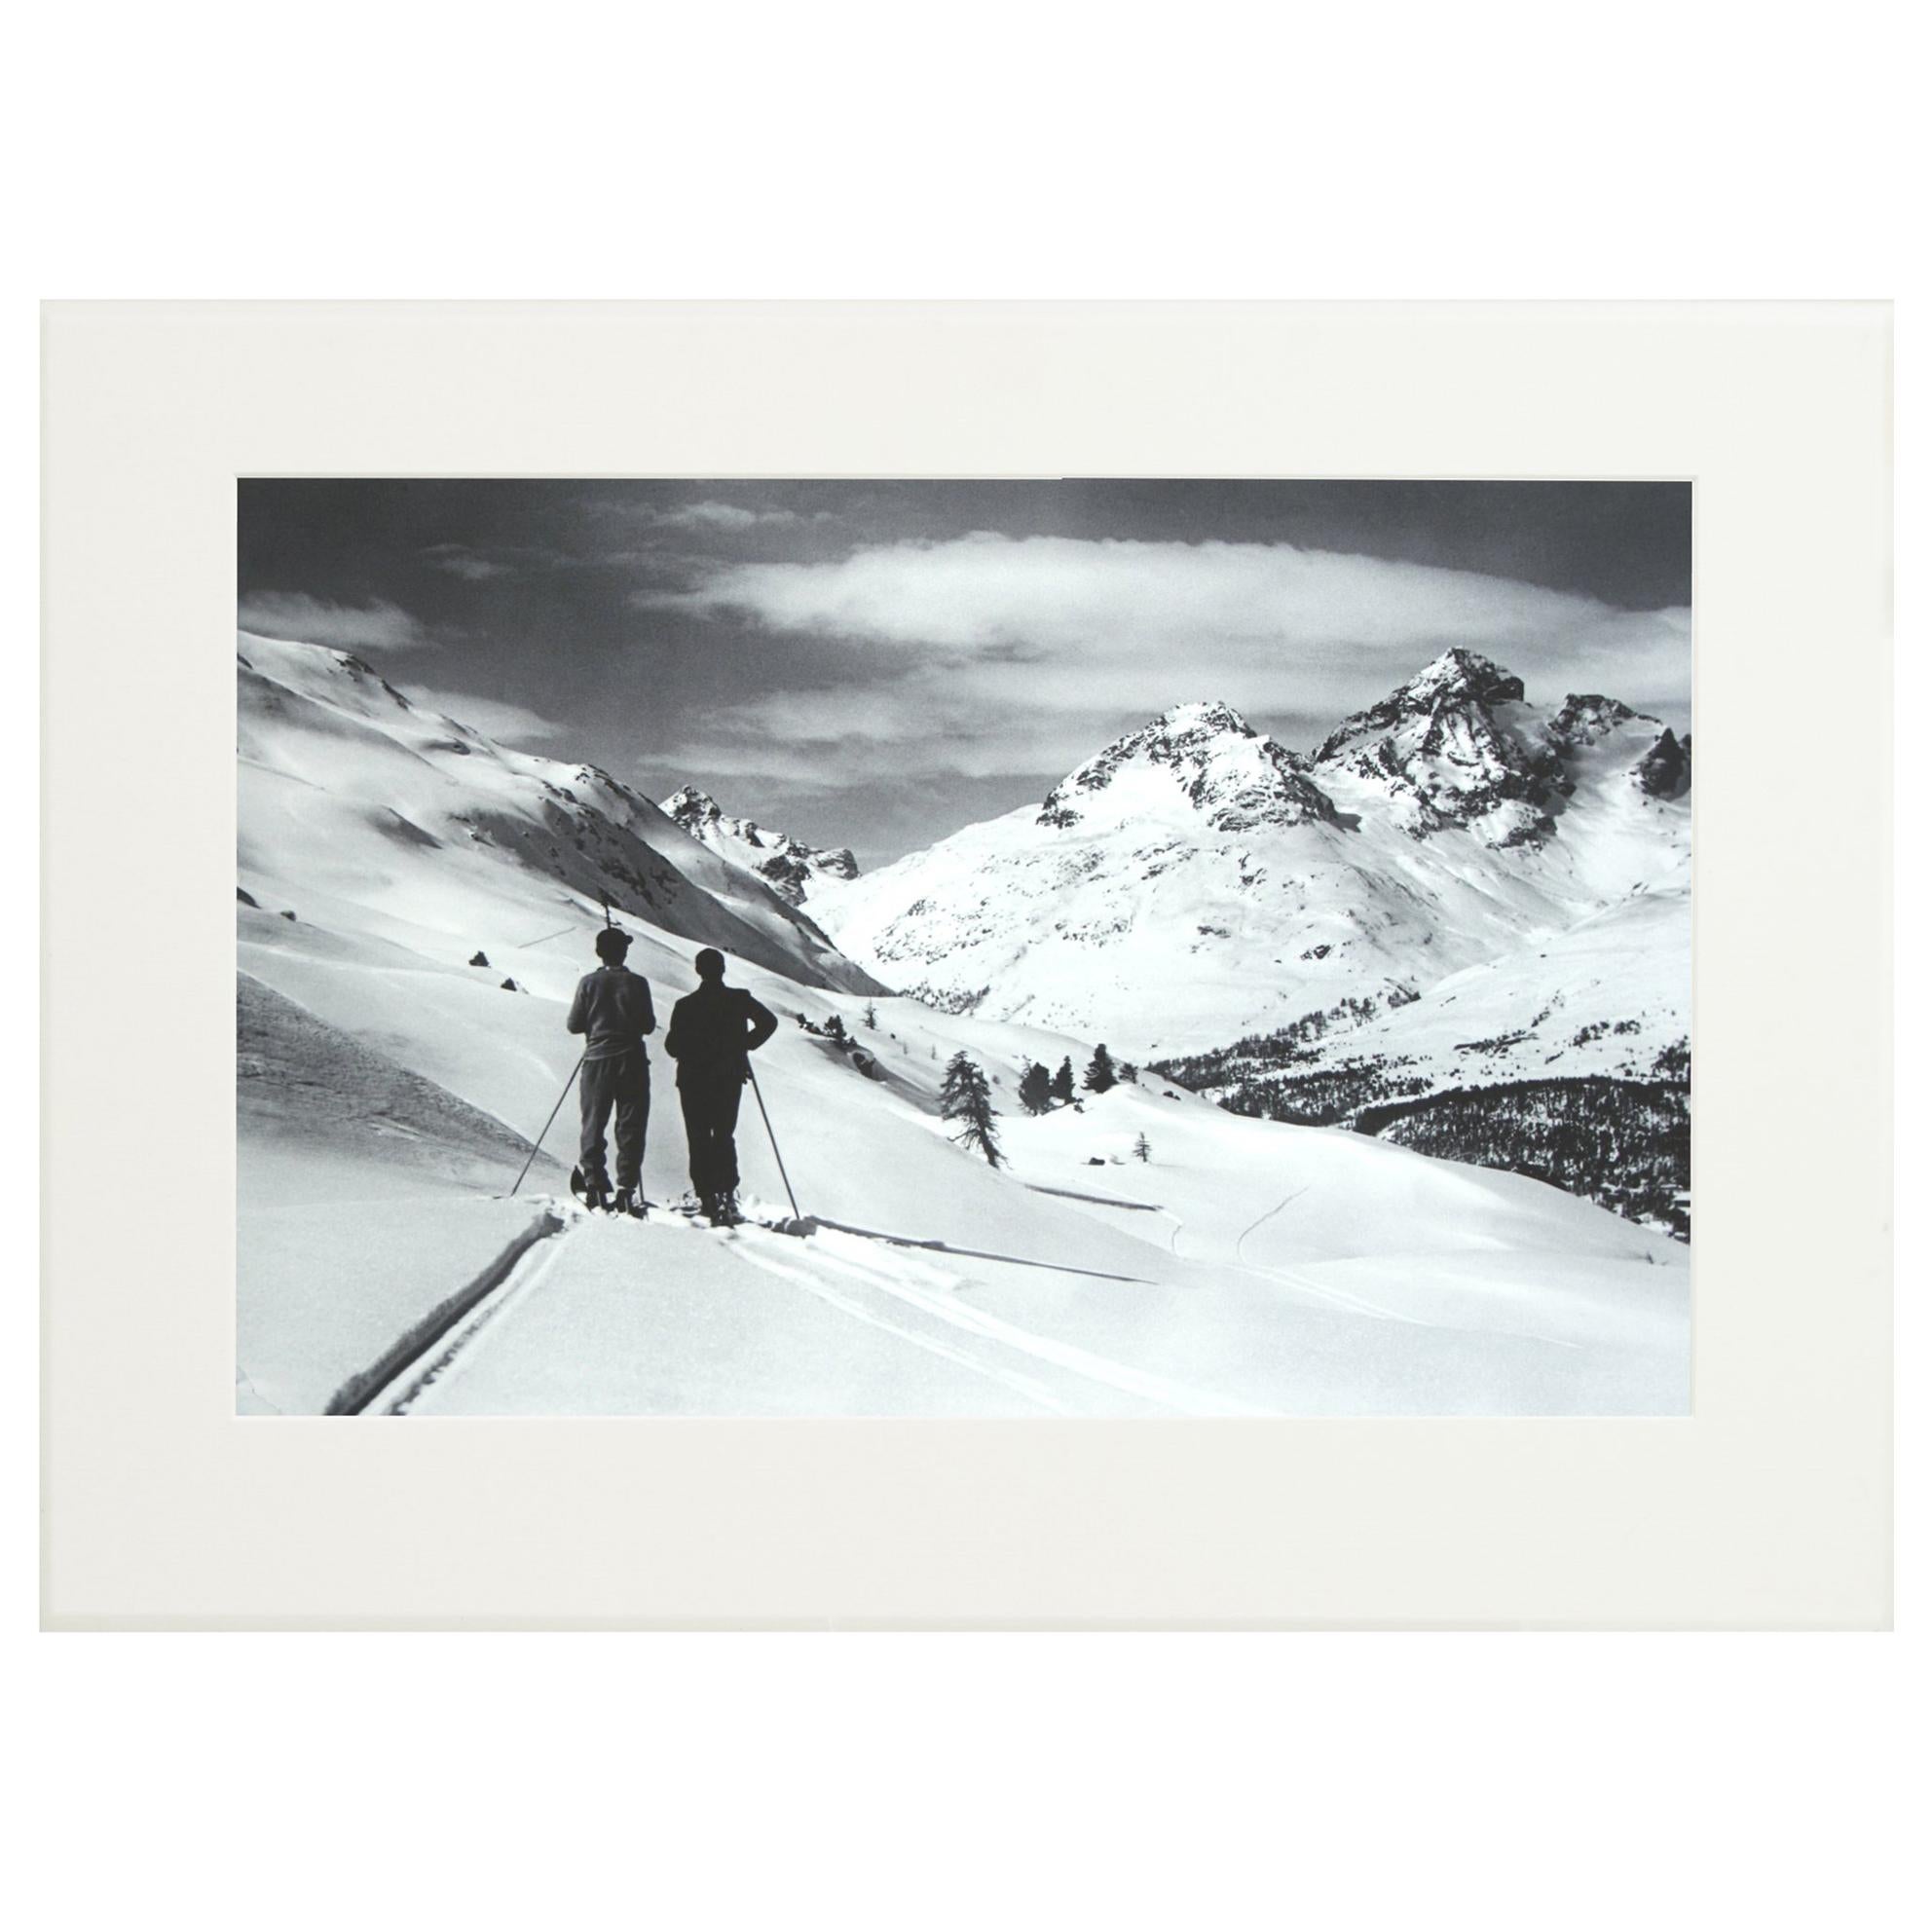 Alpine Ski Photograph, 'Panoramic View', Taken from Original 1930s Photograph